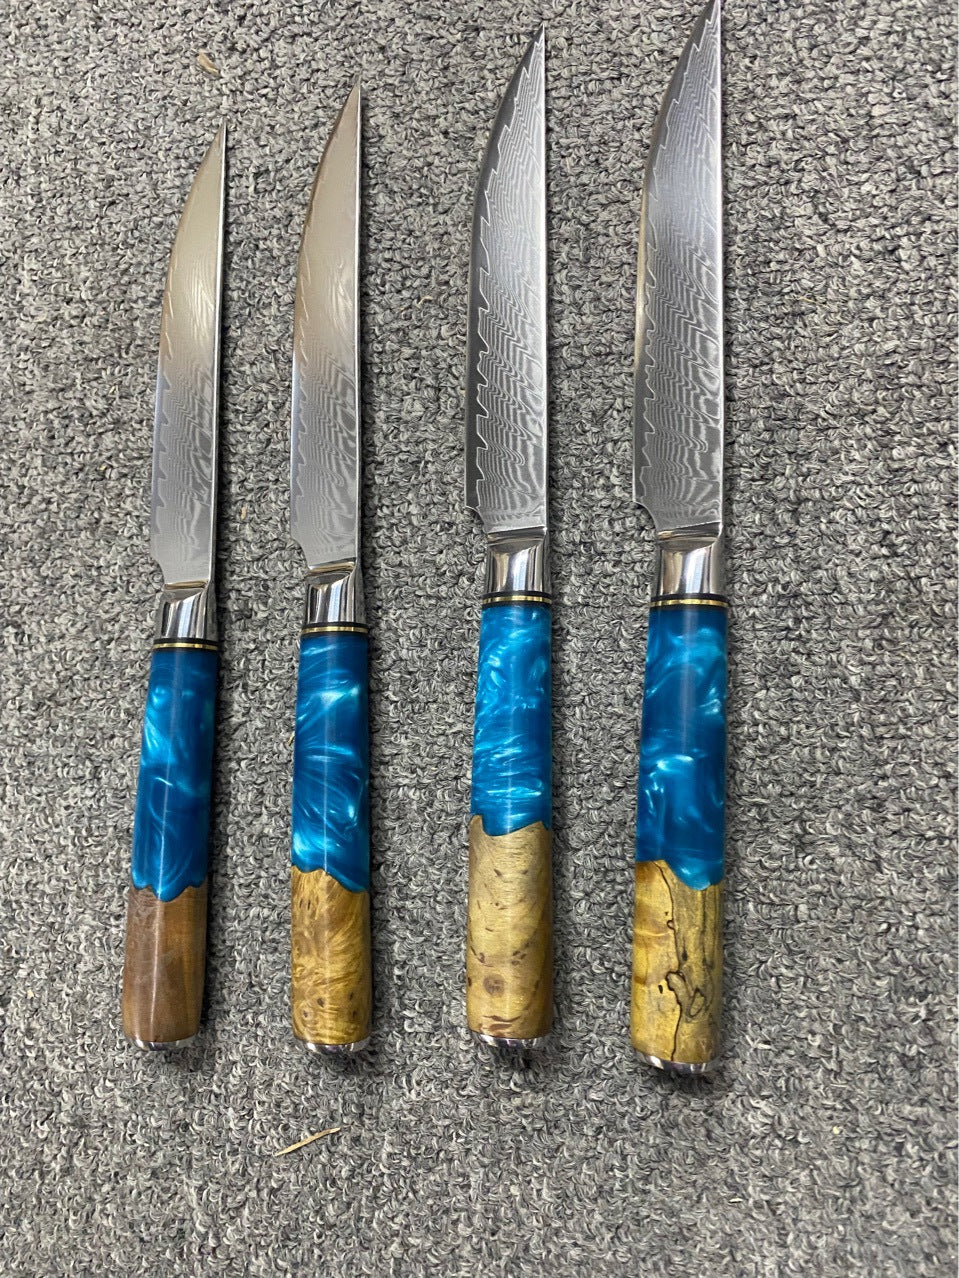 Damascus Stainless Steel Kitchen Knife